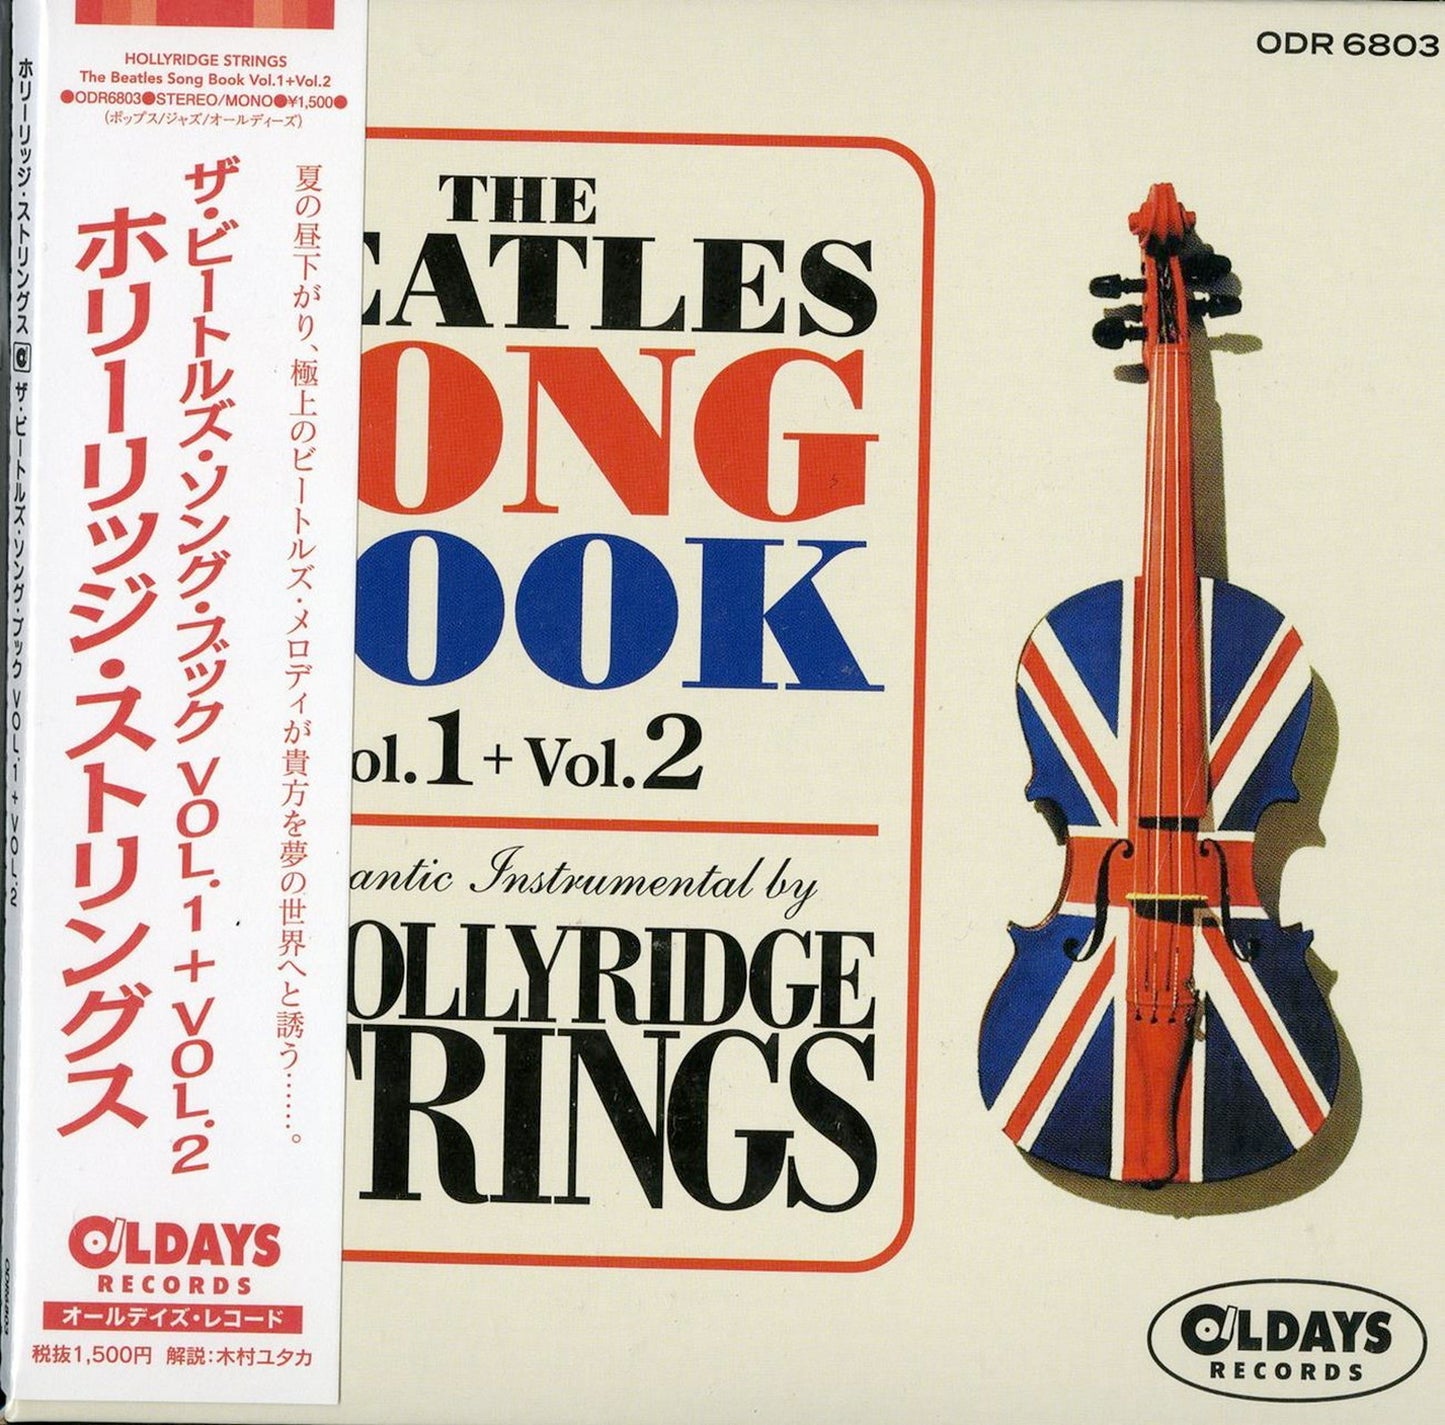 Hollyridge Strings - The Beatles Song Book Vol.1 & 2 - Japan  Mini LP CD